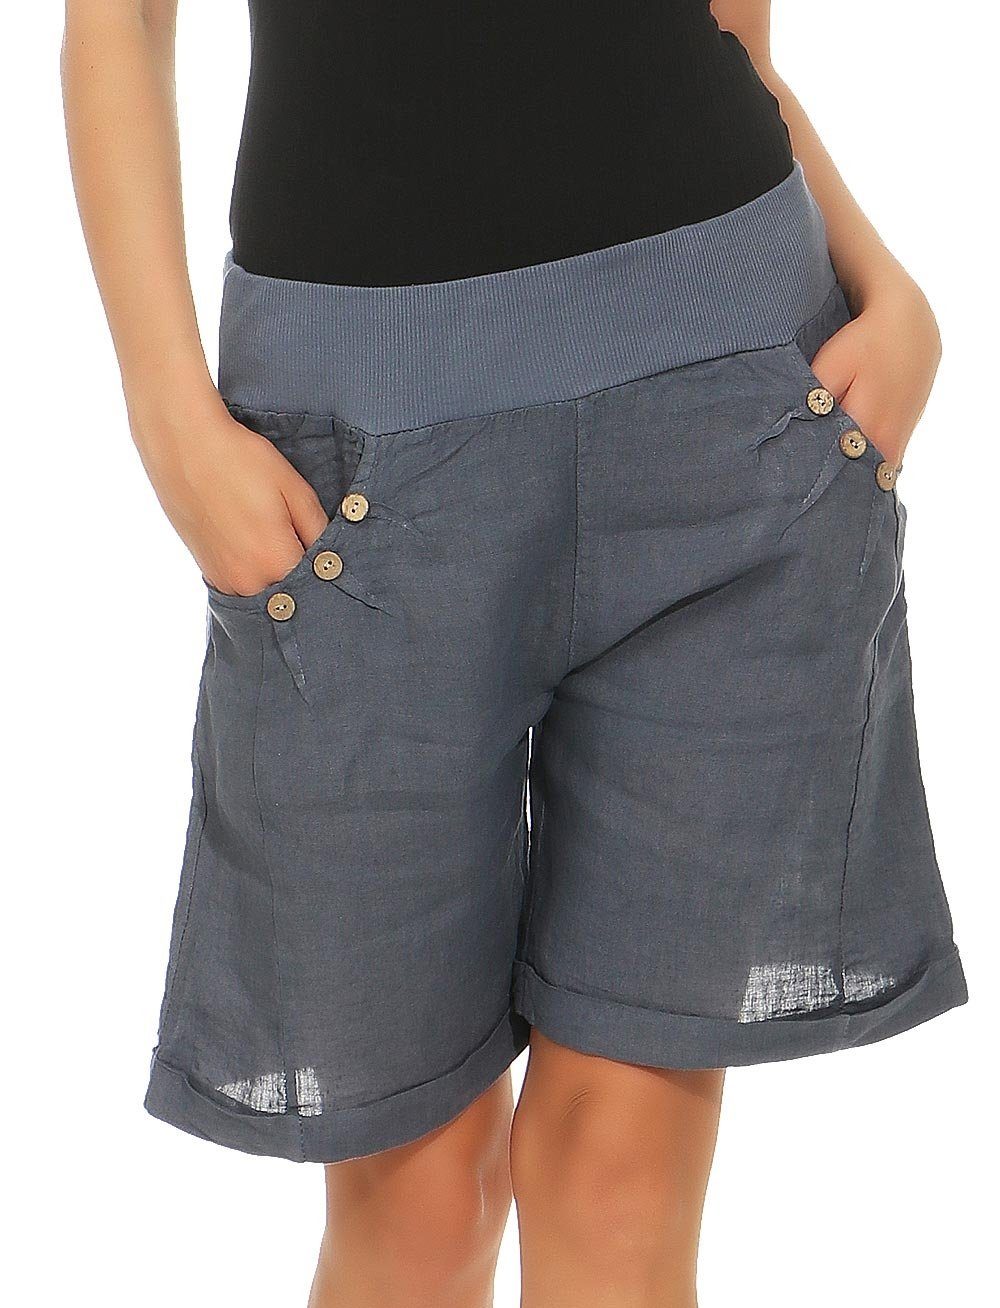 malito more than fashion Leinenhose 8024 Bermuda aus Leinen Shorts jeansblau